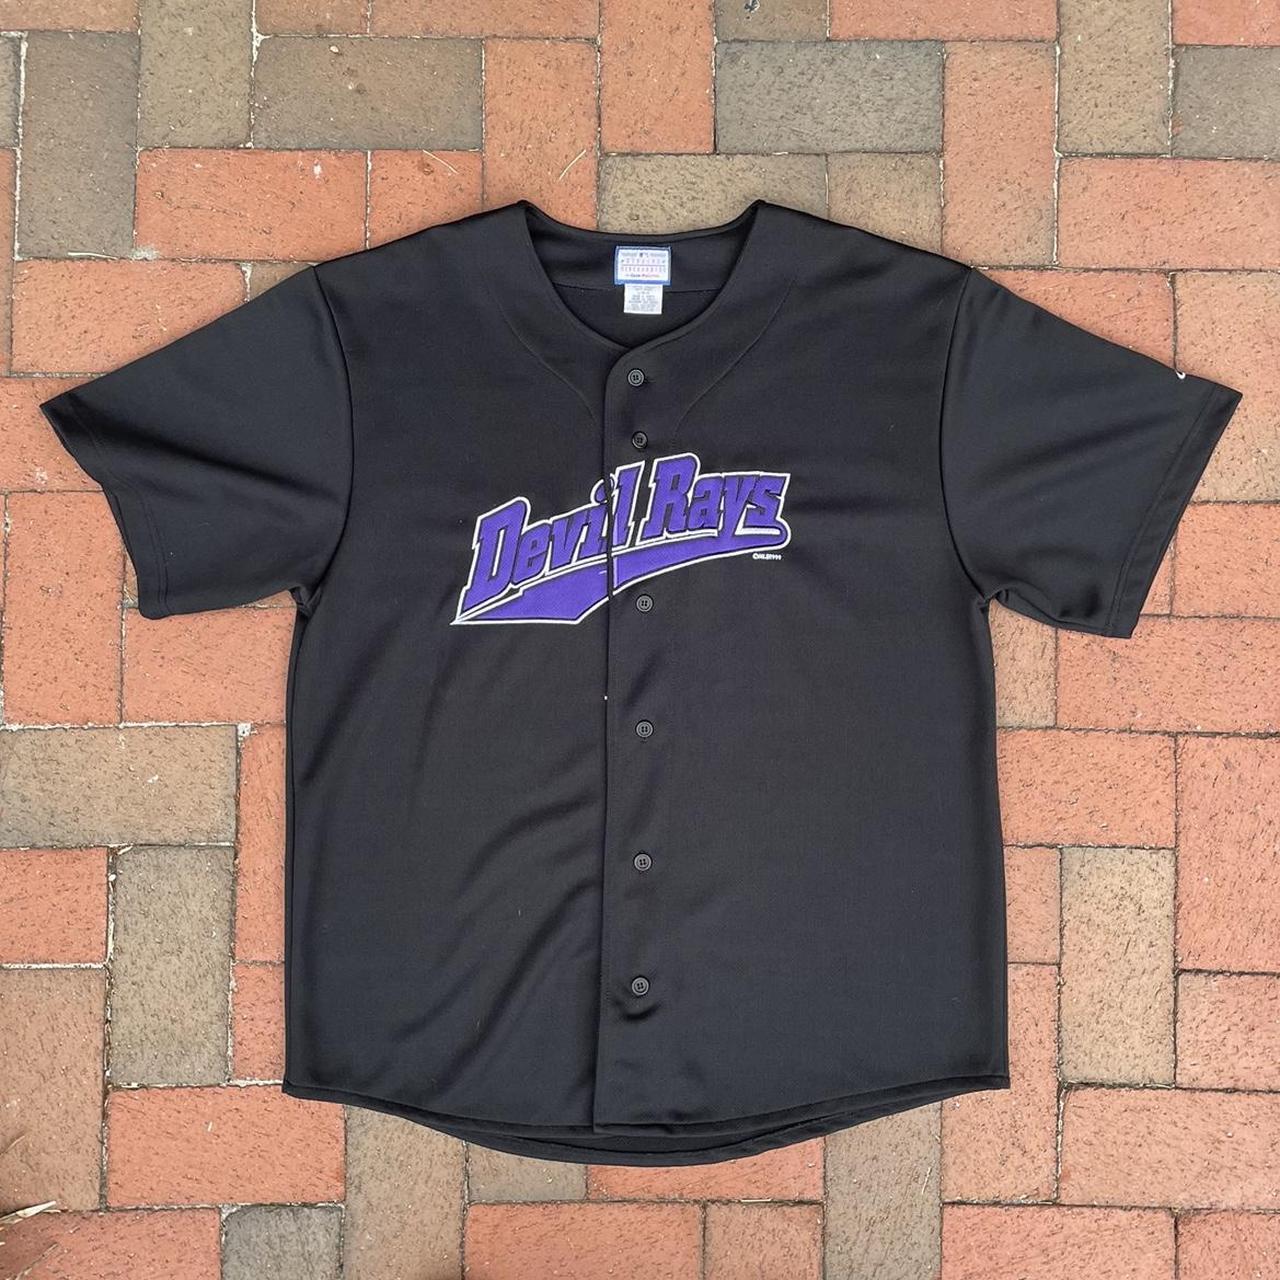 RARE 90's Vintage Tampa Bay Devil Rays jersey